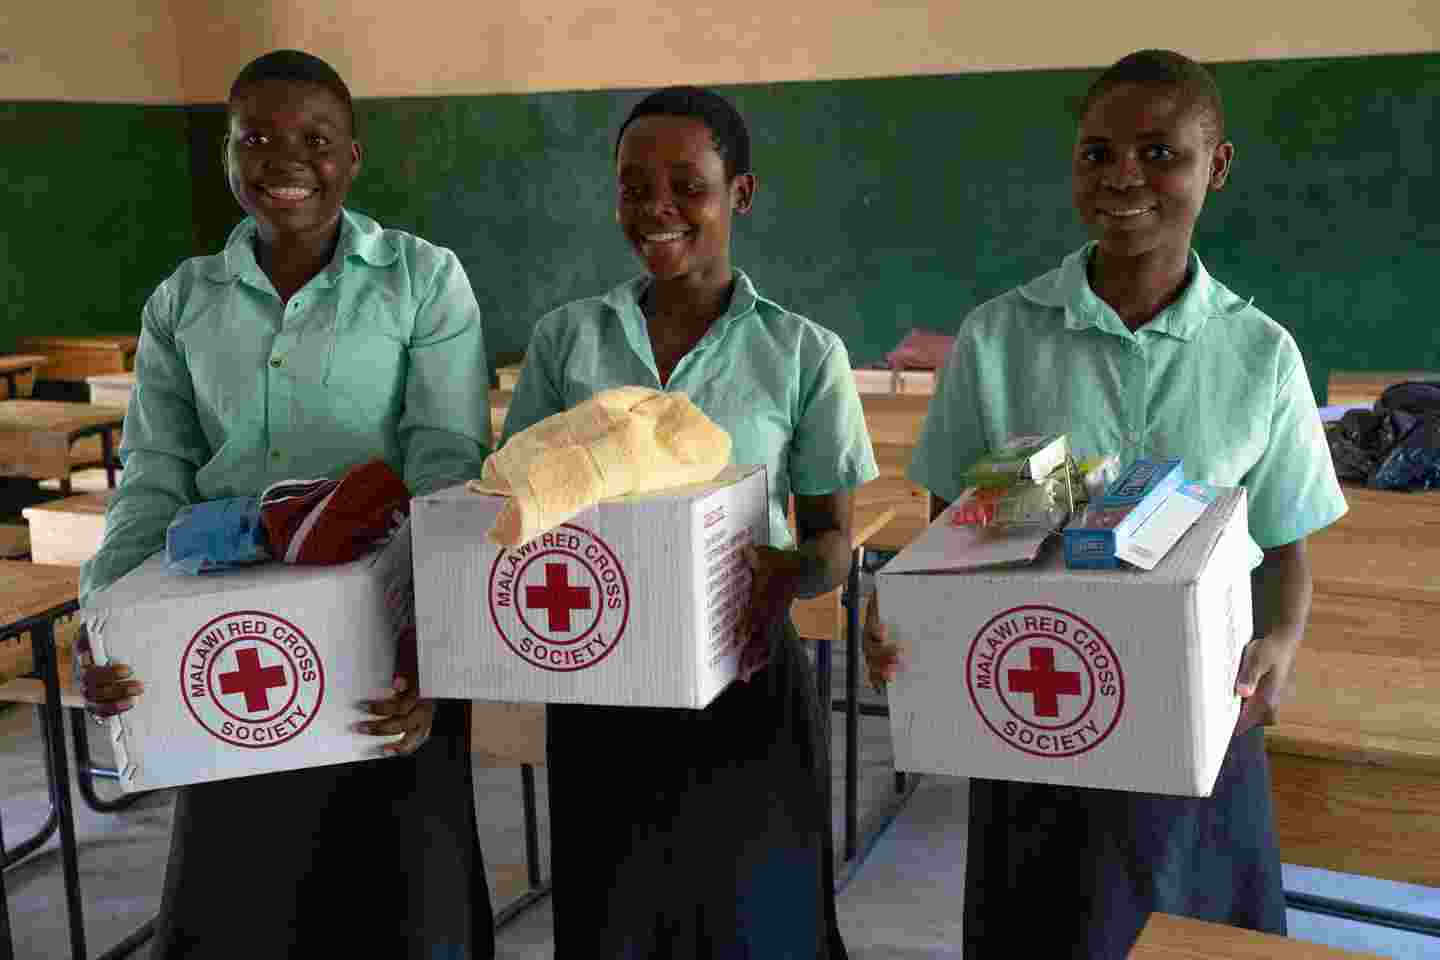 Smiling schoolgirls with hygiene packs.